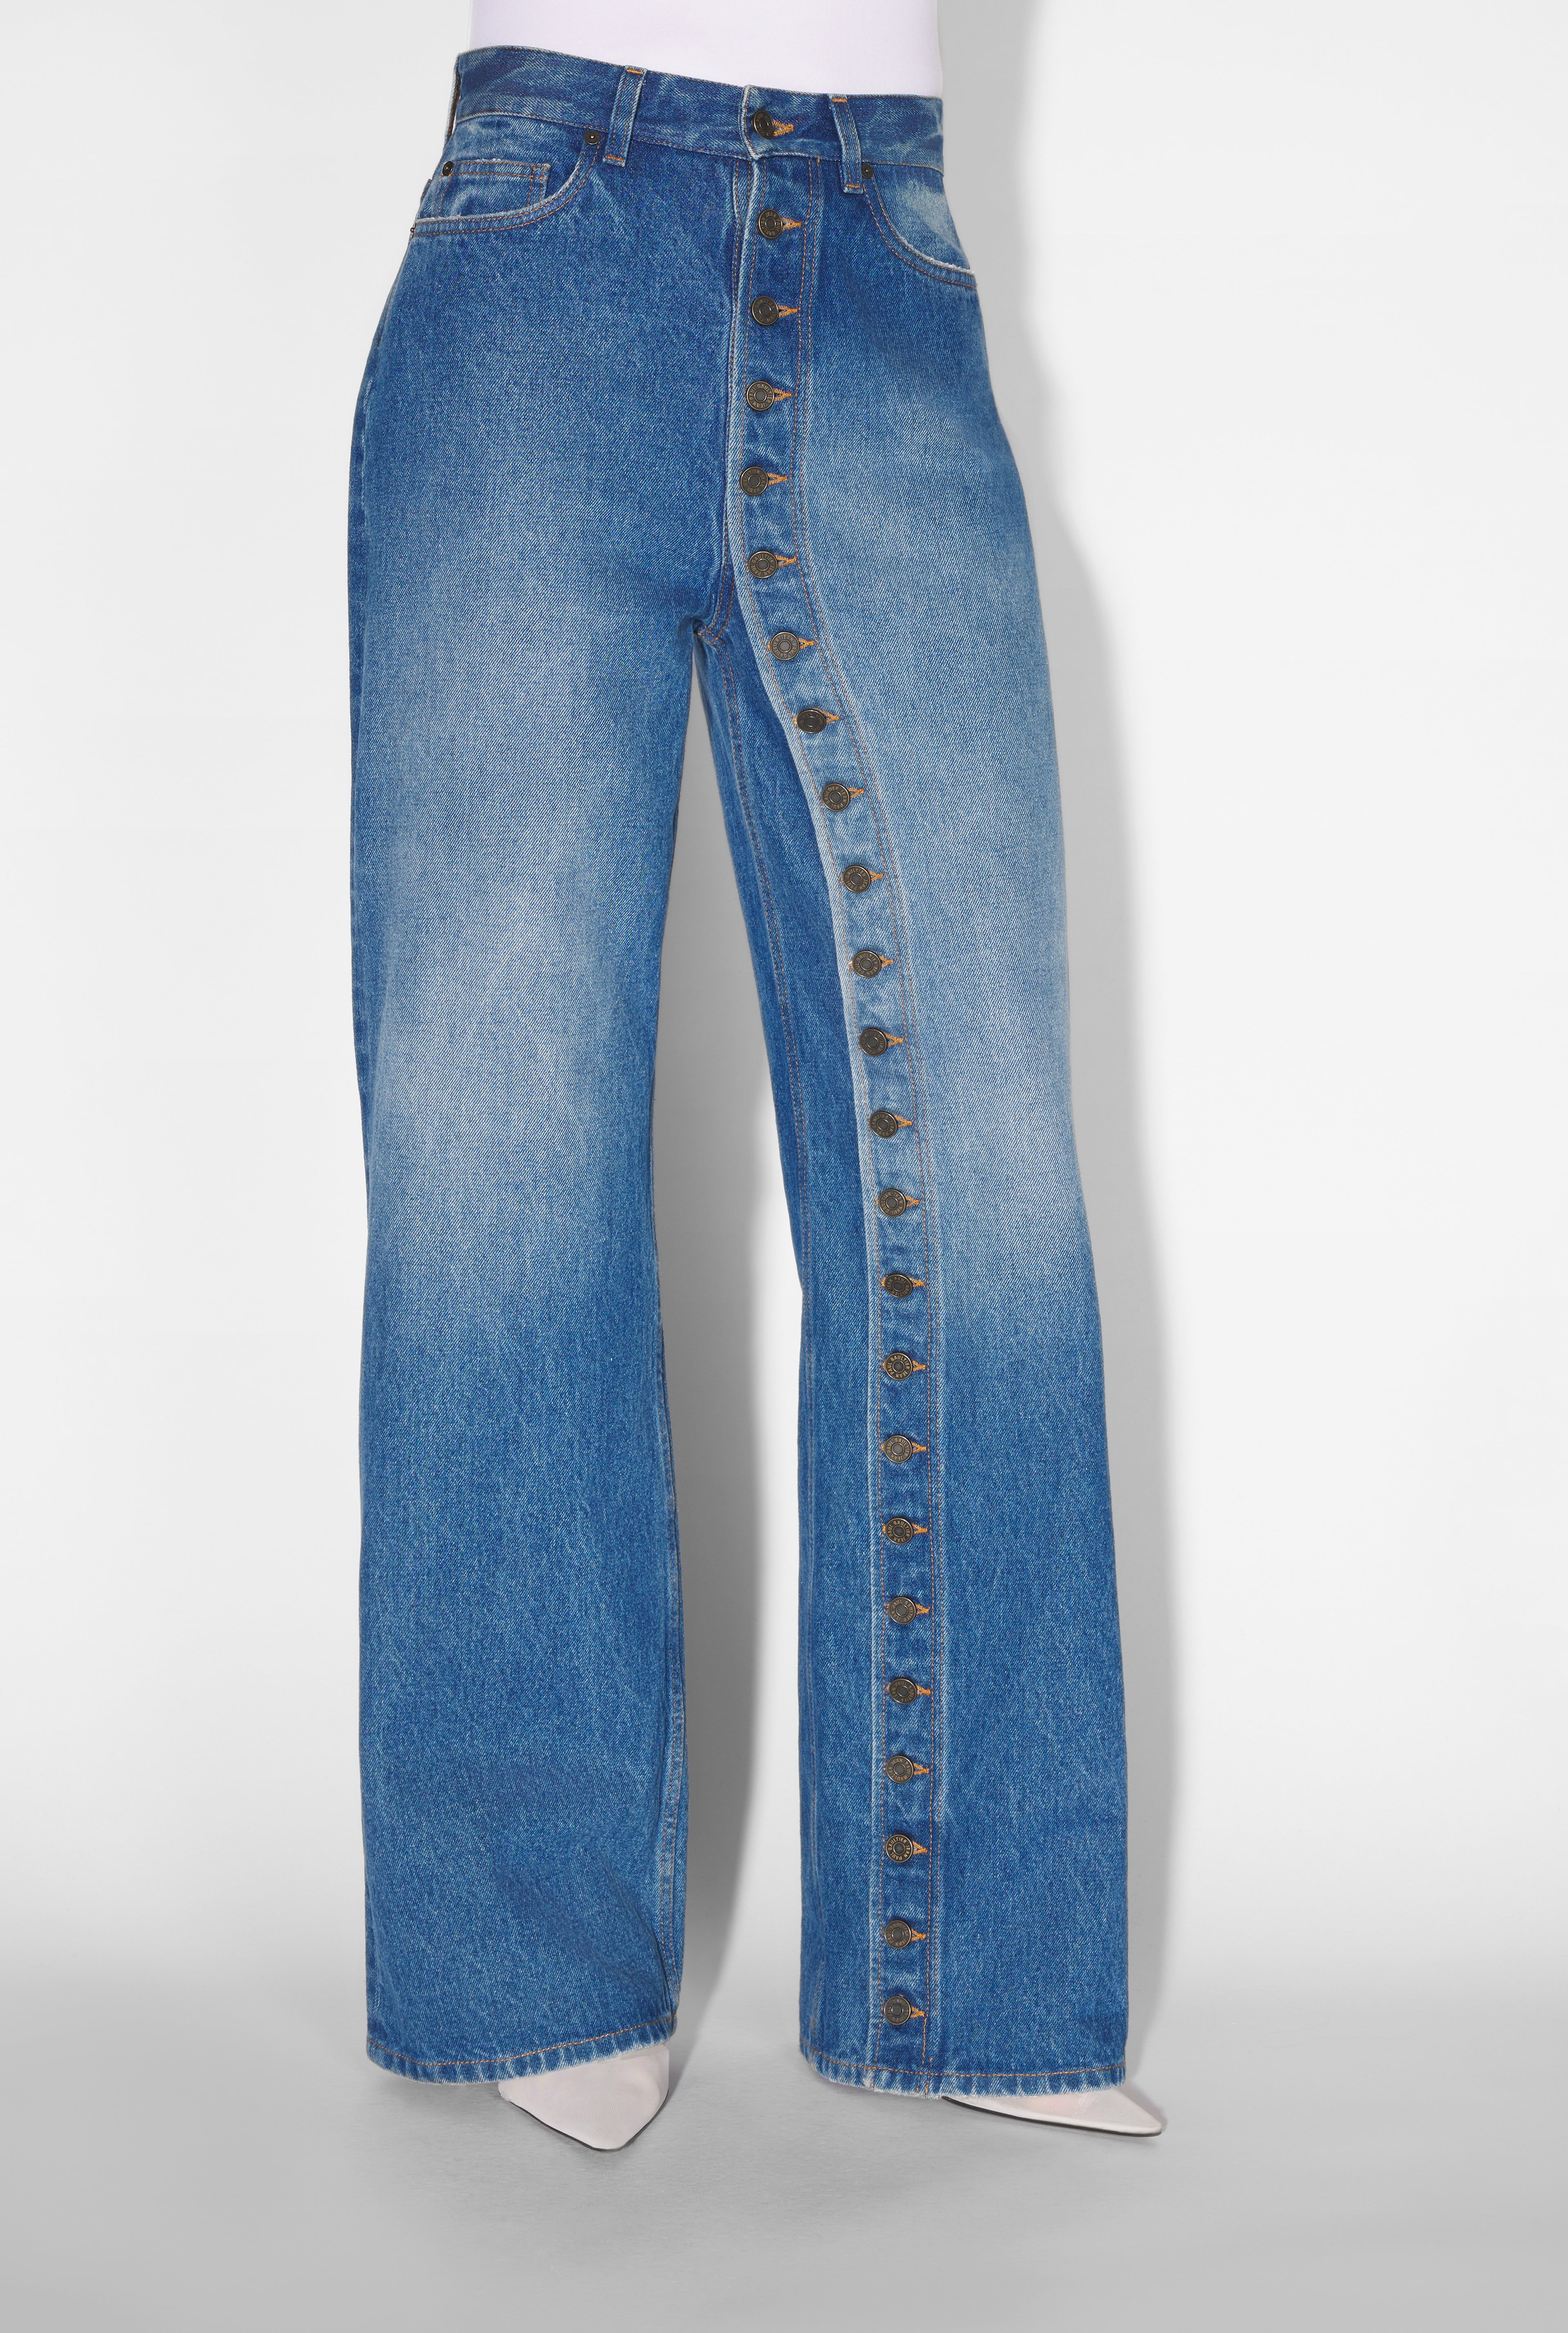 The Denim Haute Jeanerie Jeans